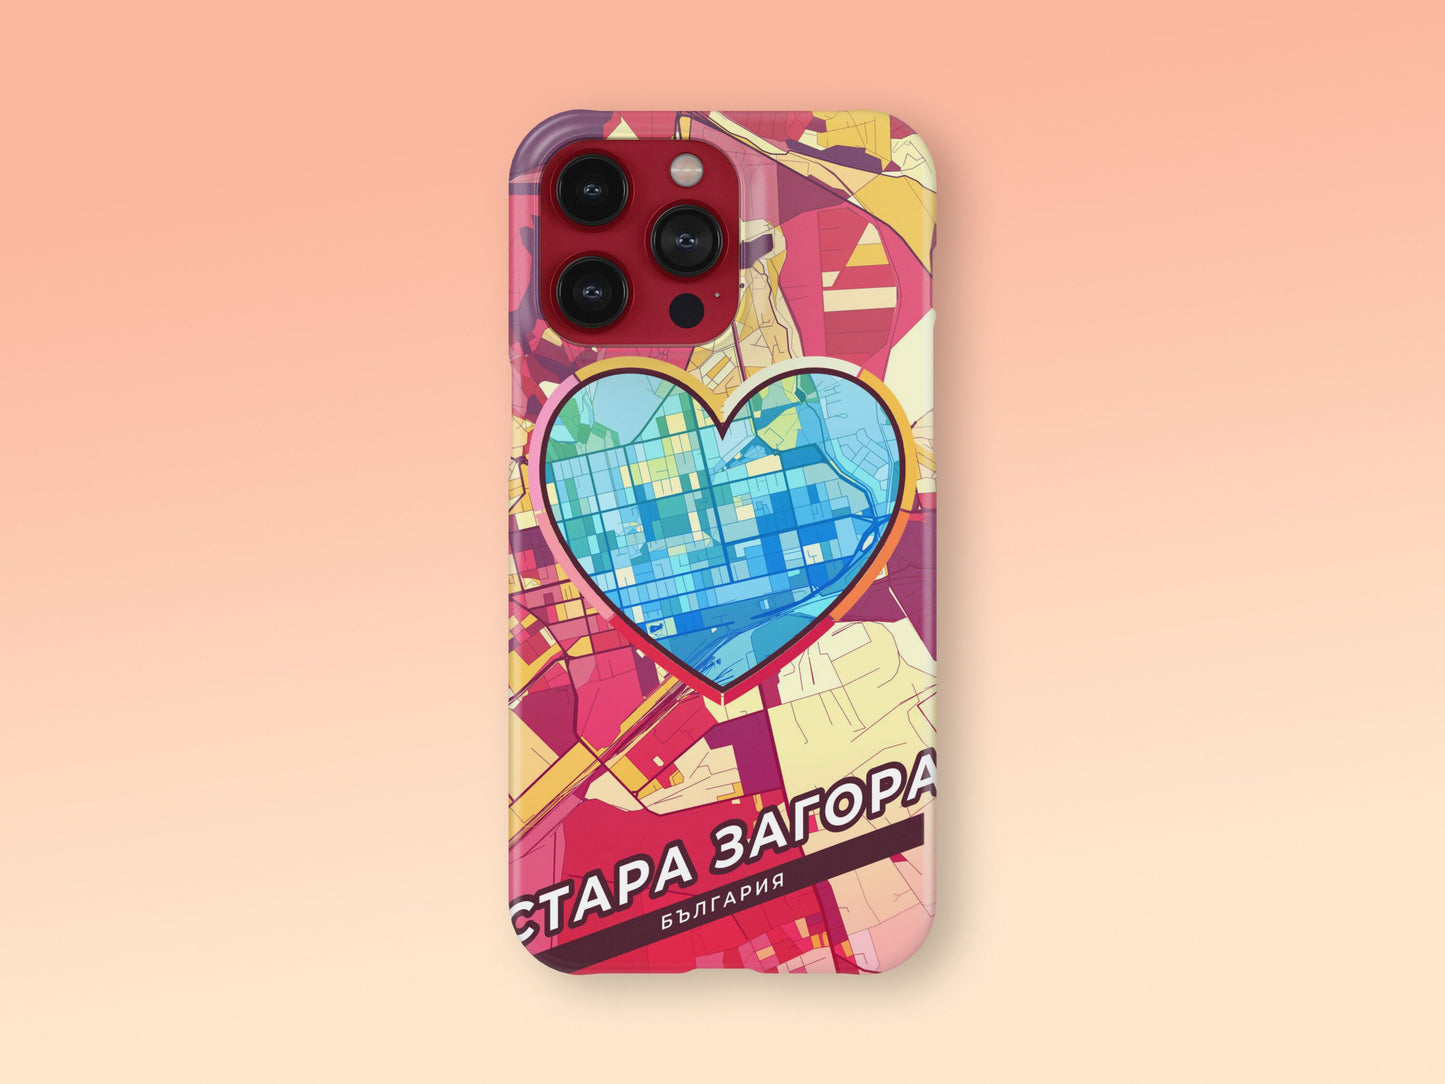 Стара Загора България slim phone case with colorful icon. Birthday, wedding or housewarming gift. Couple match cases. 2